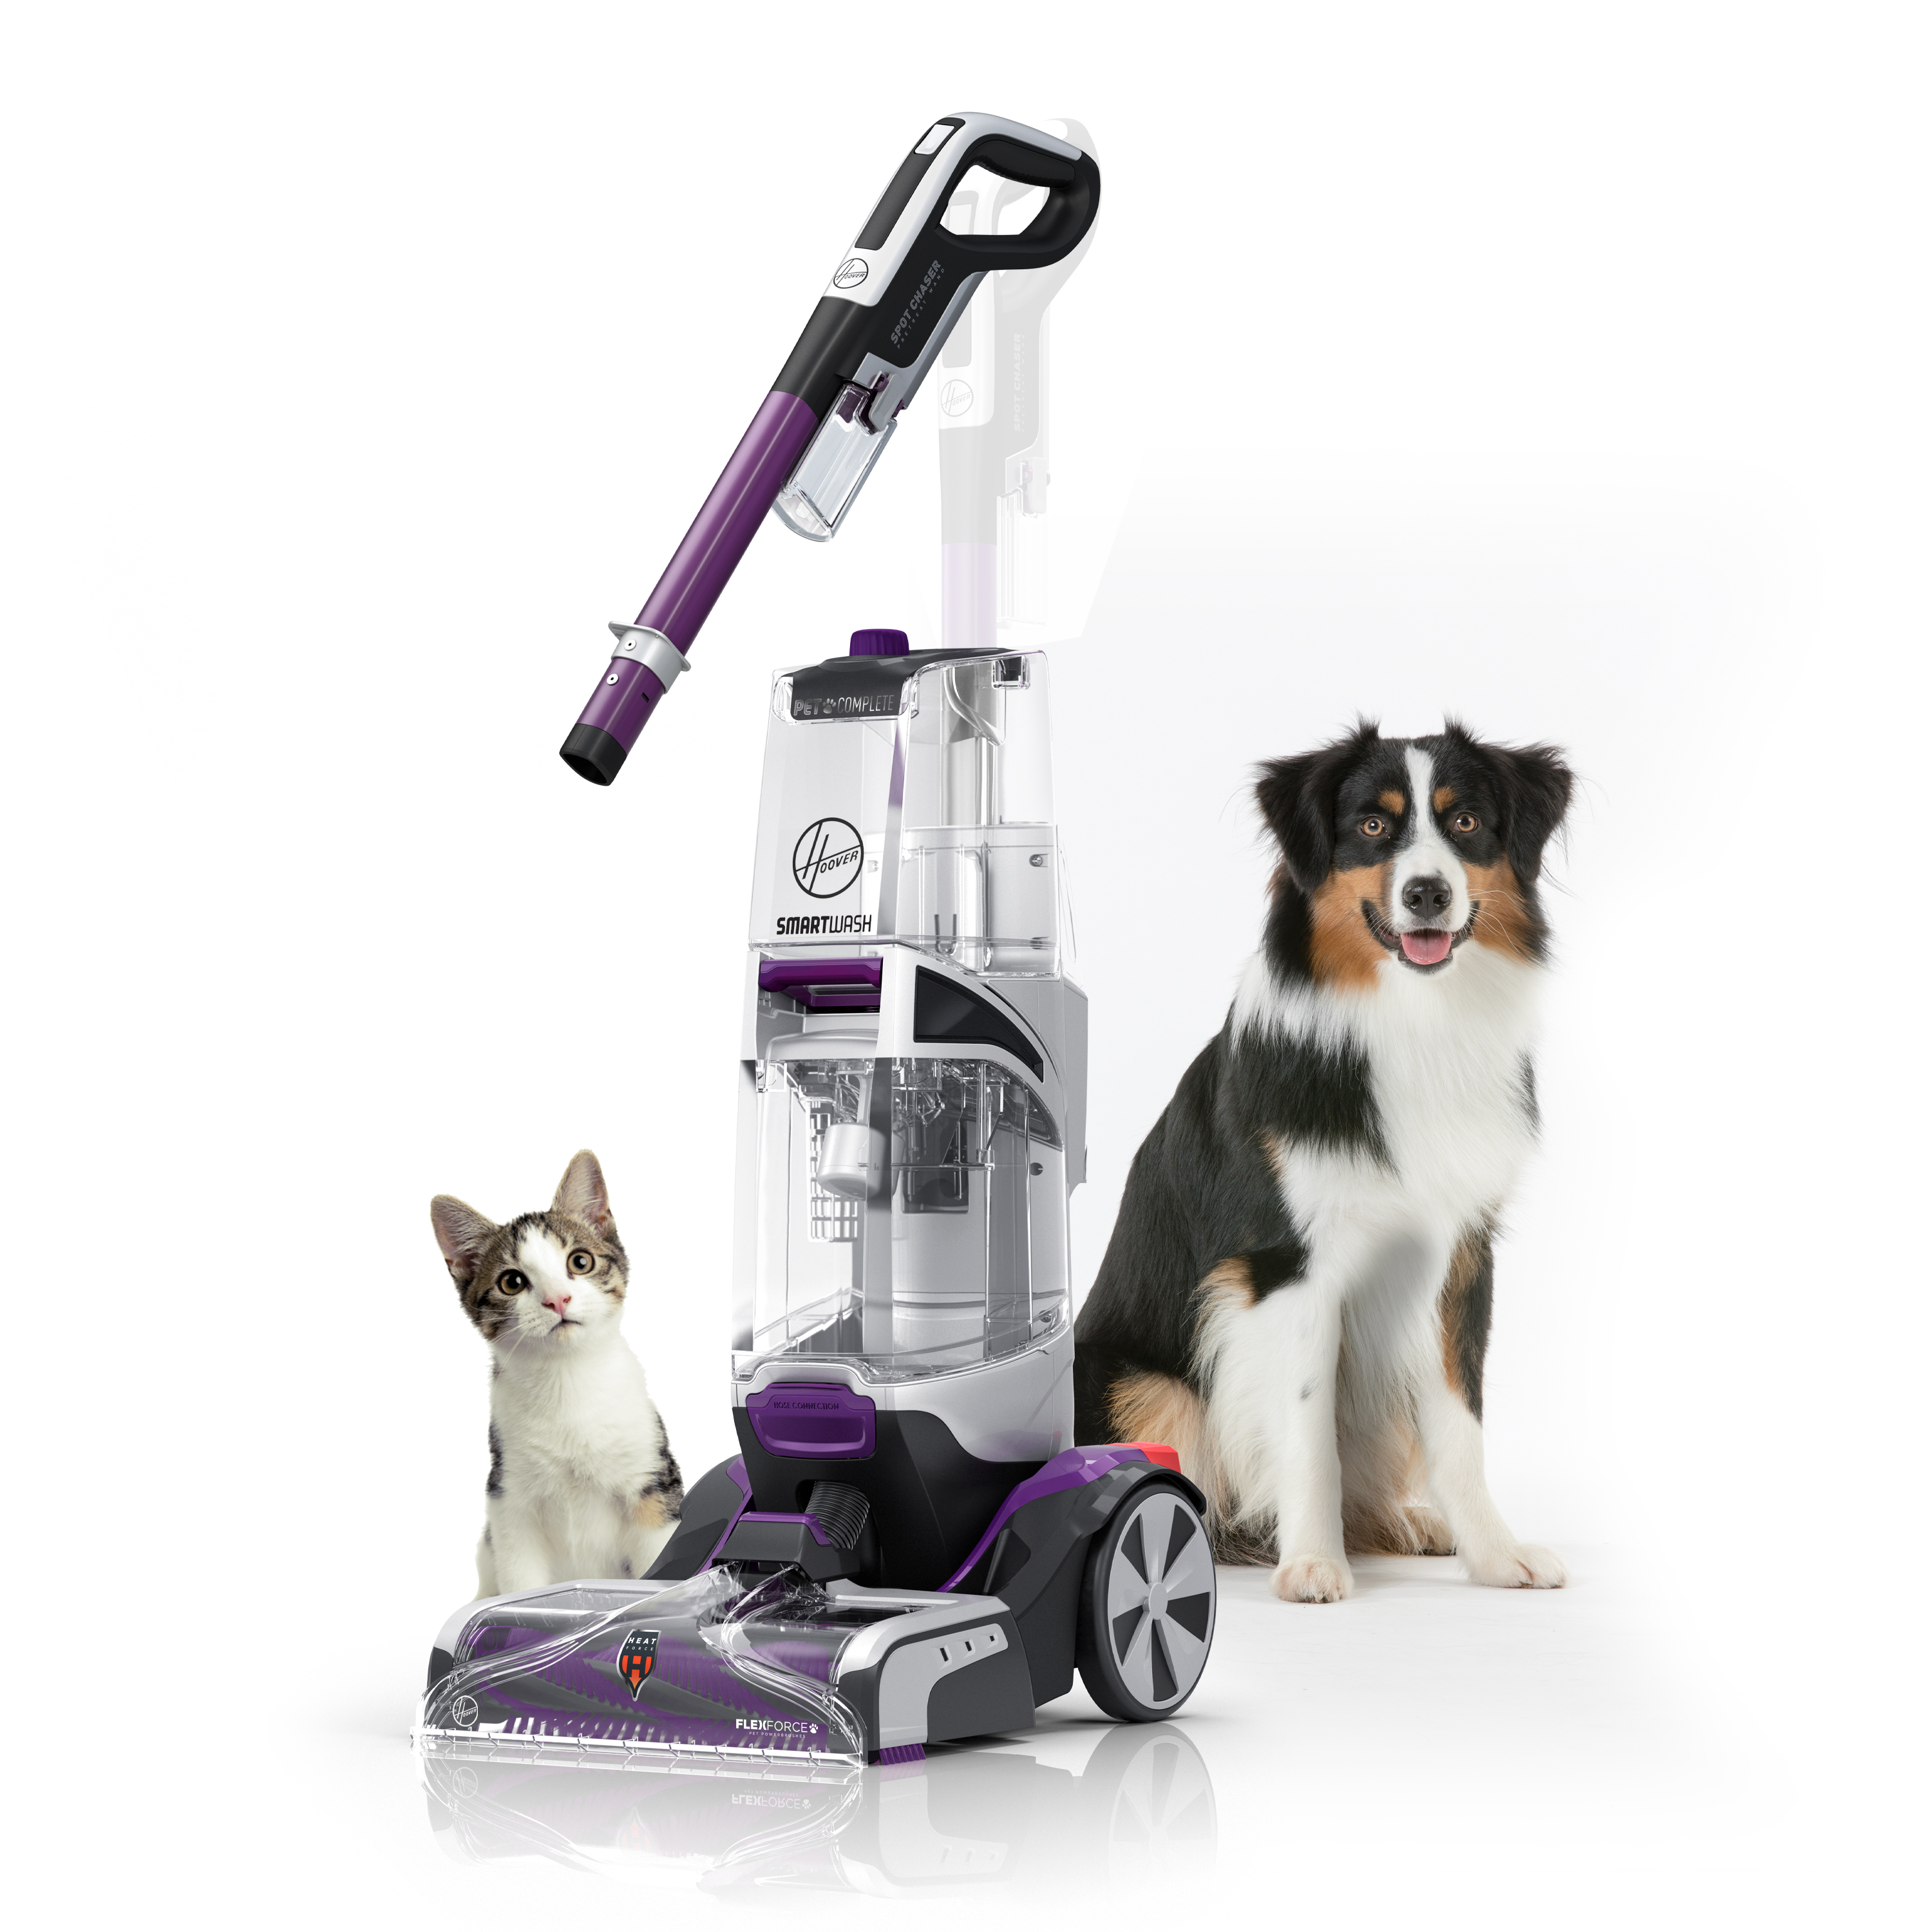 Hoover Smartwash Pet Carpet Cleaner Machine, FH53010 - Walmart.com